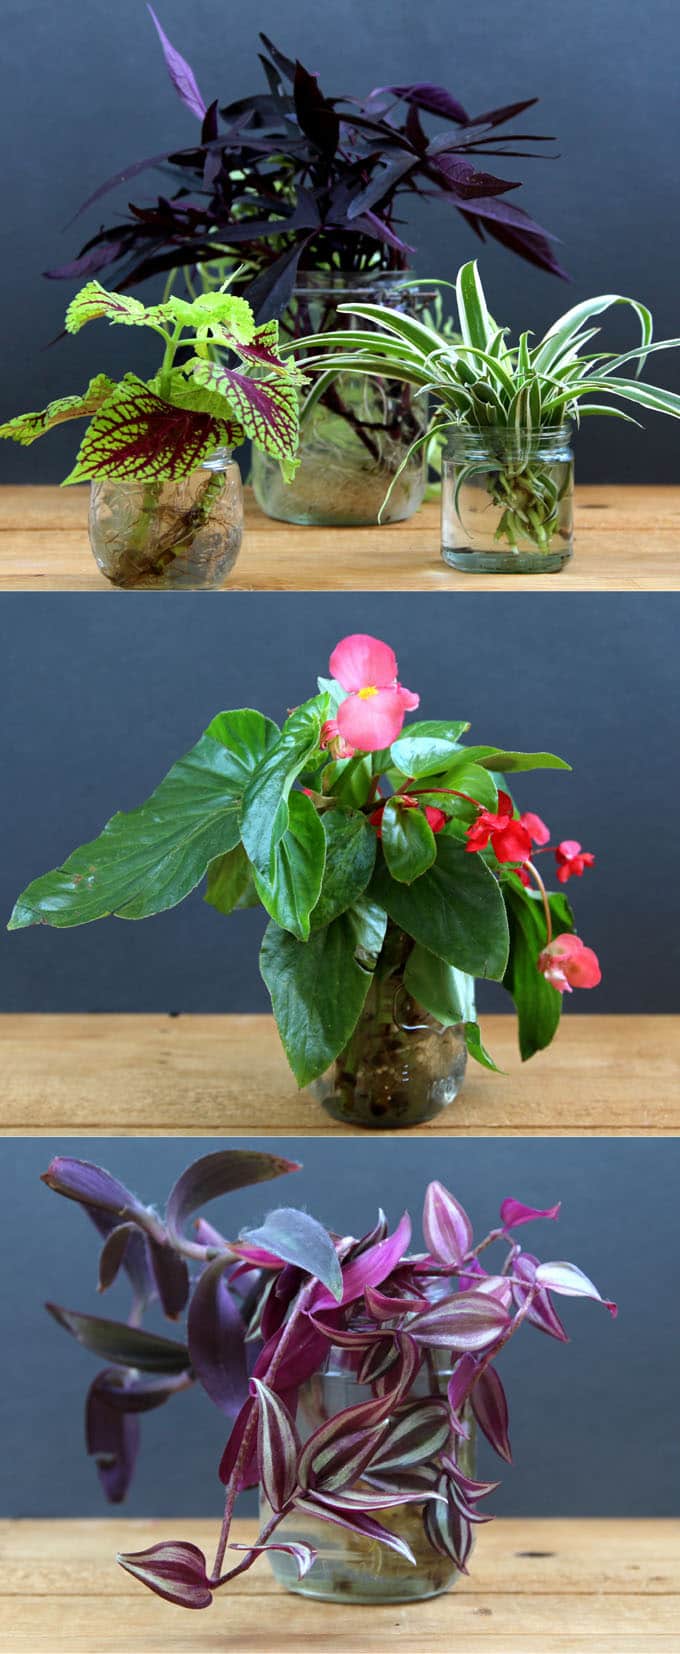 grow indoor plants in glass bottles and water